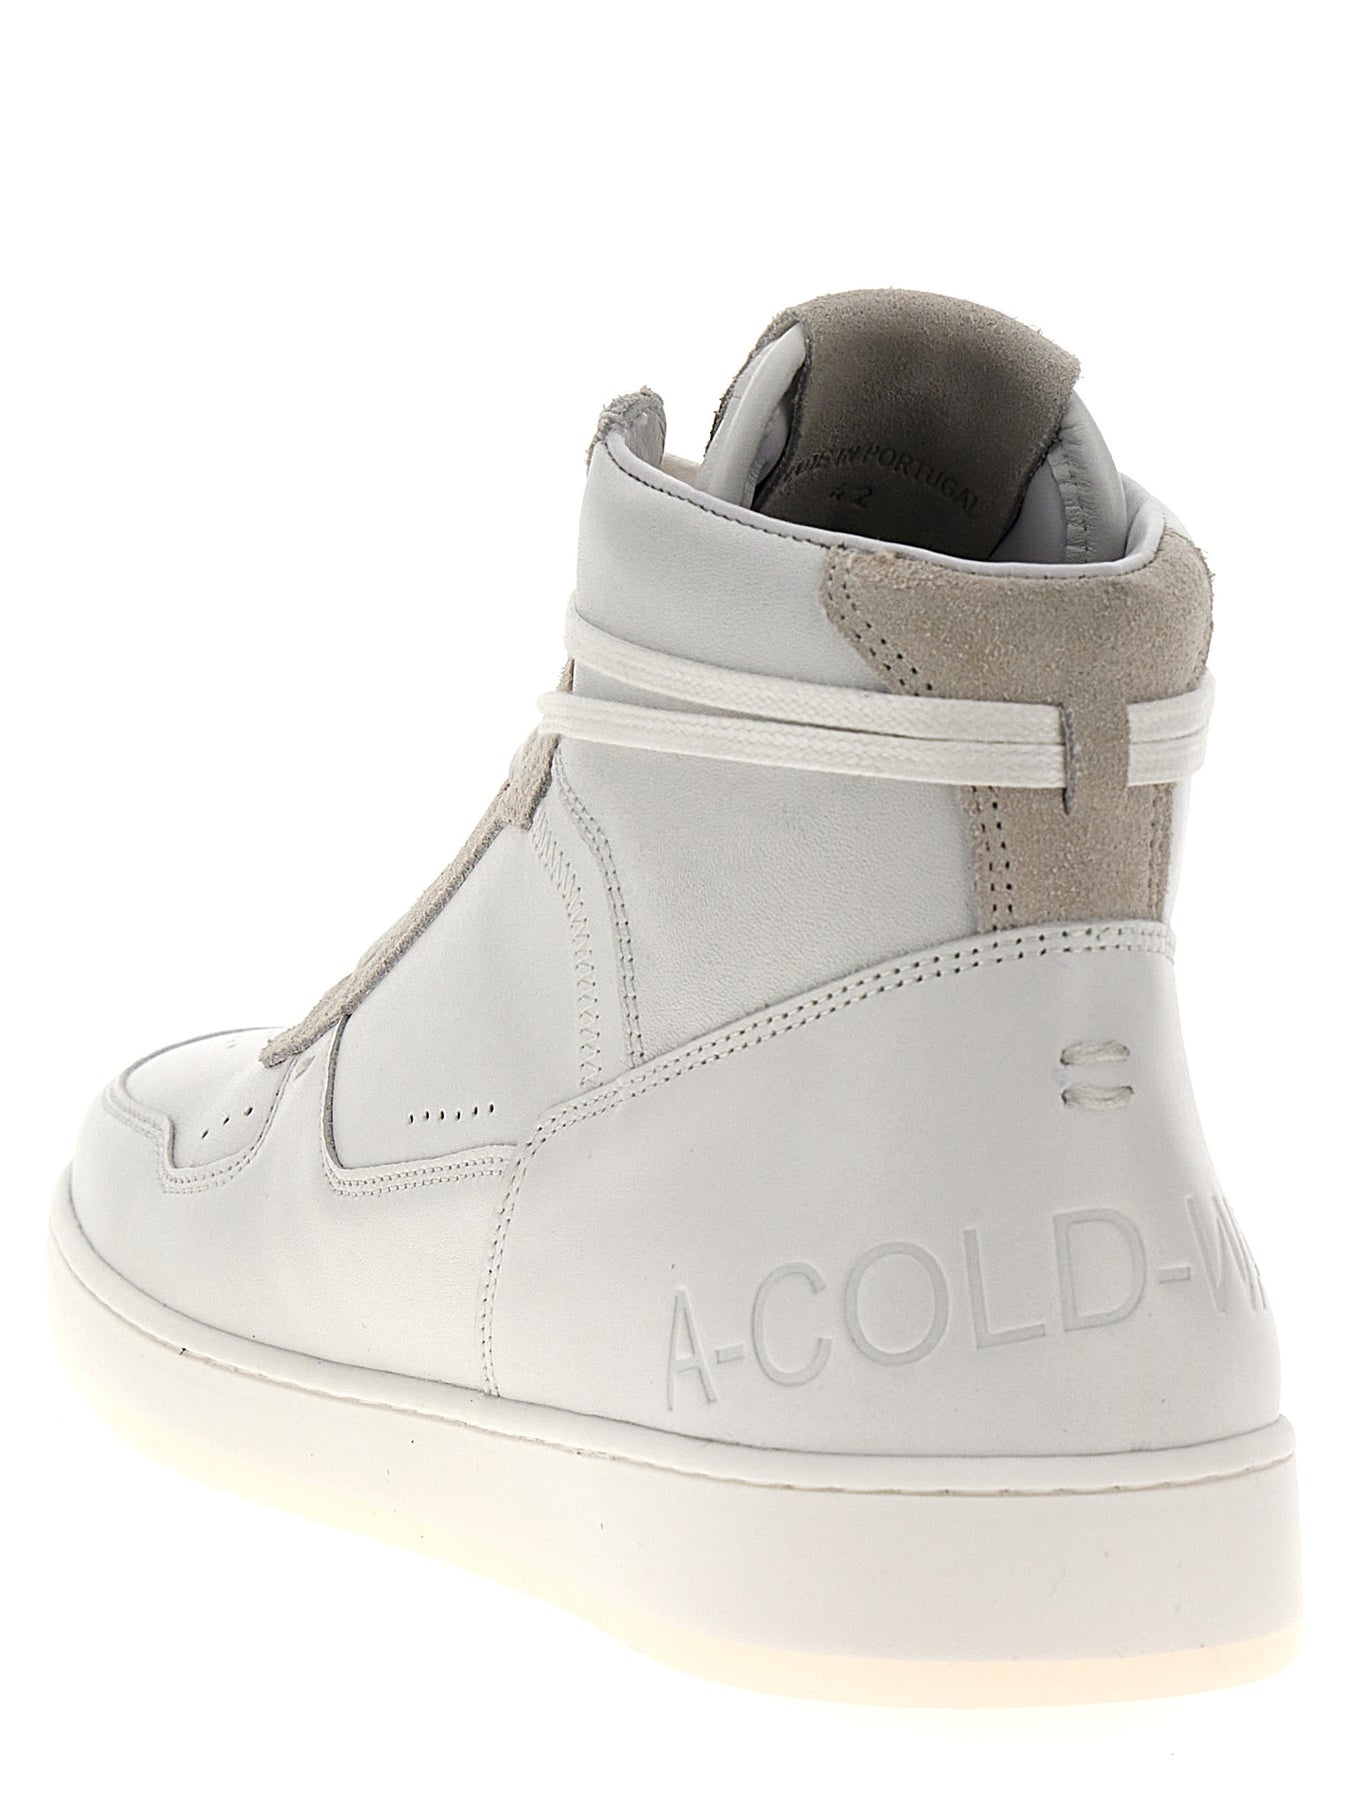 Luol Hi Top Sneakers White - 2